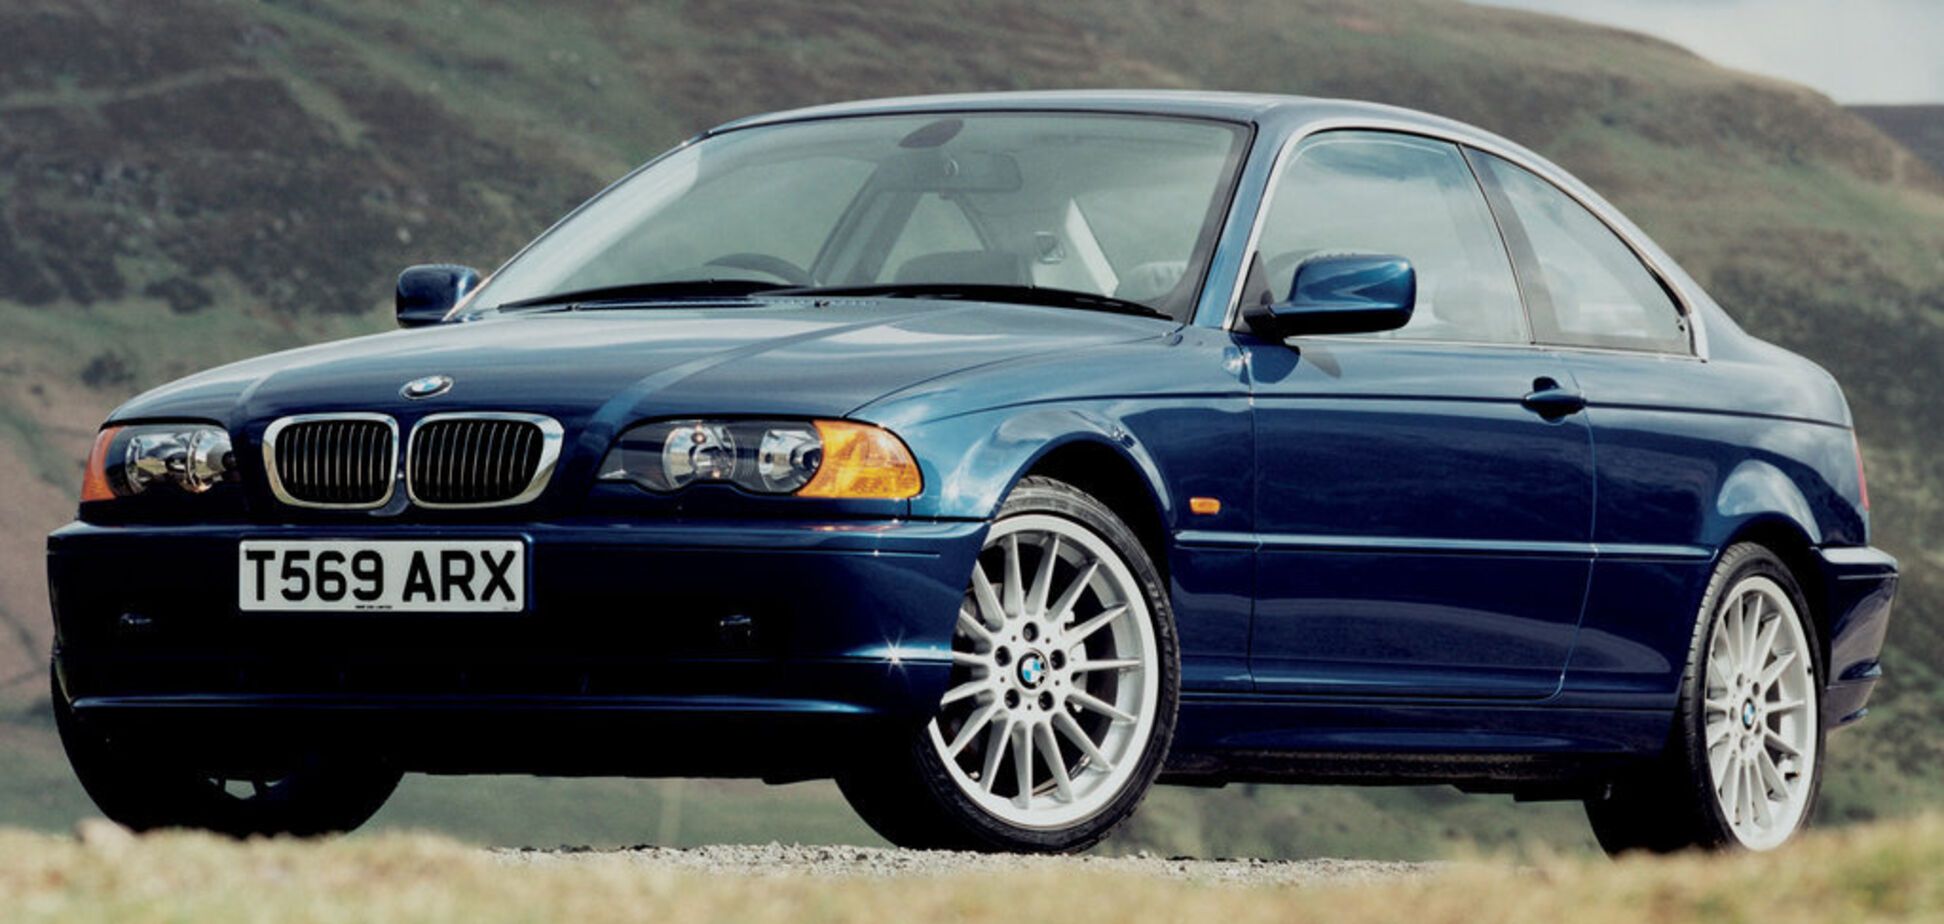 Блогер купил за $500 'живую' BMW и почти сразу разрушил ее